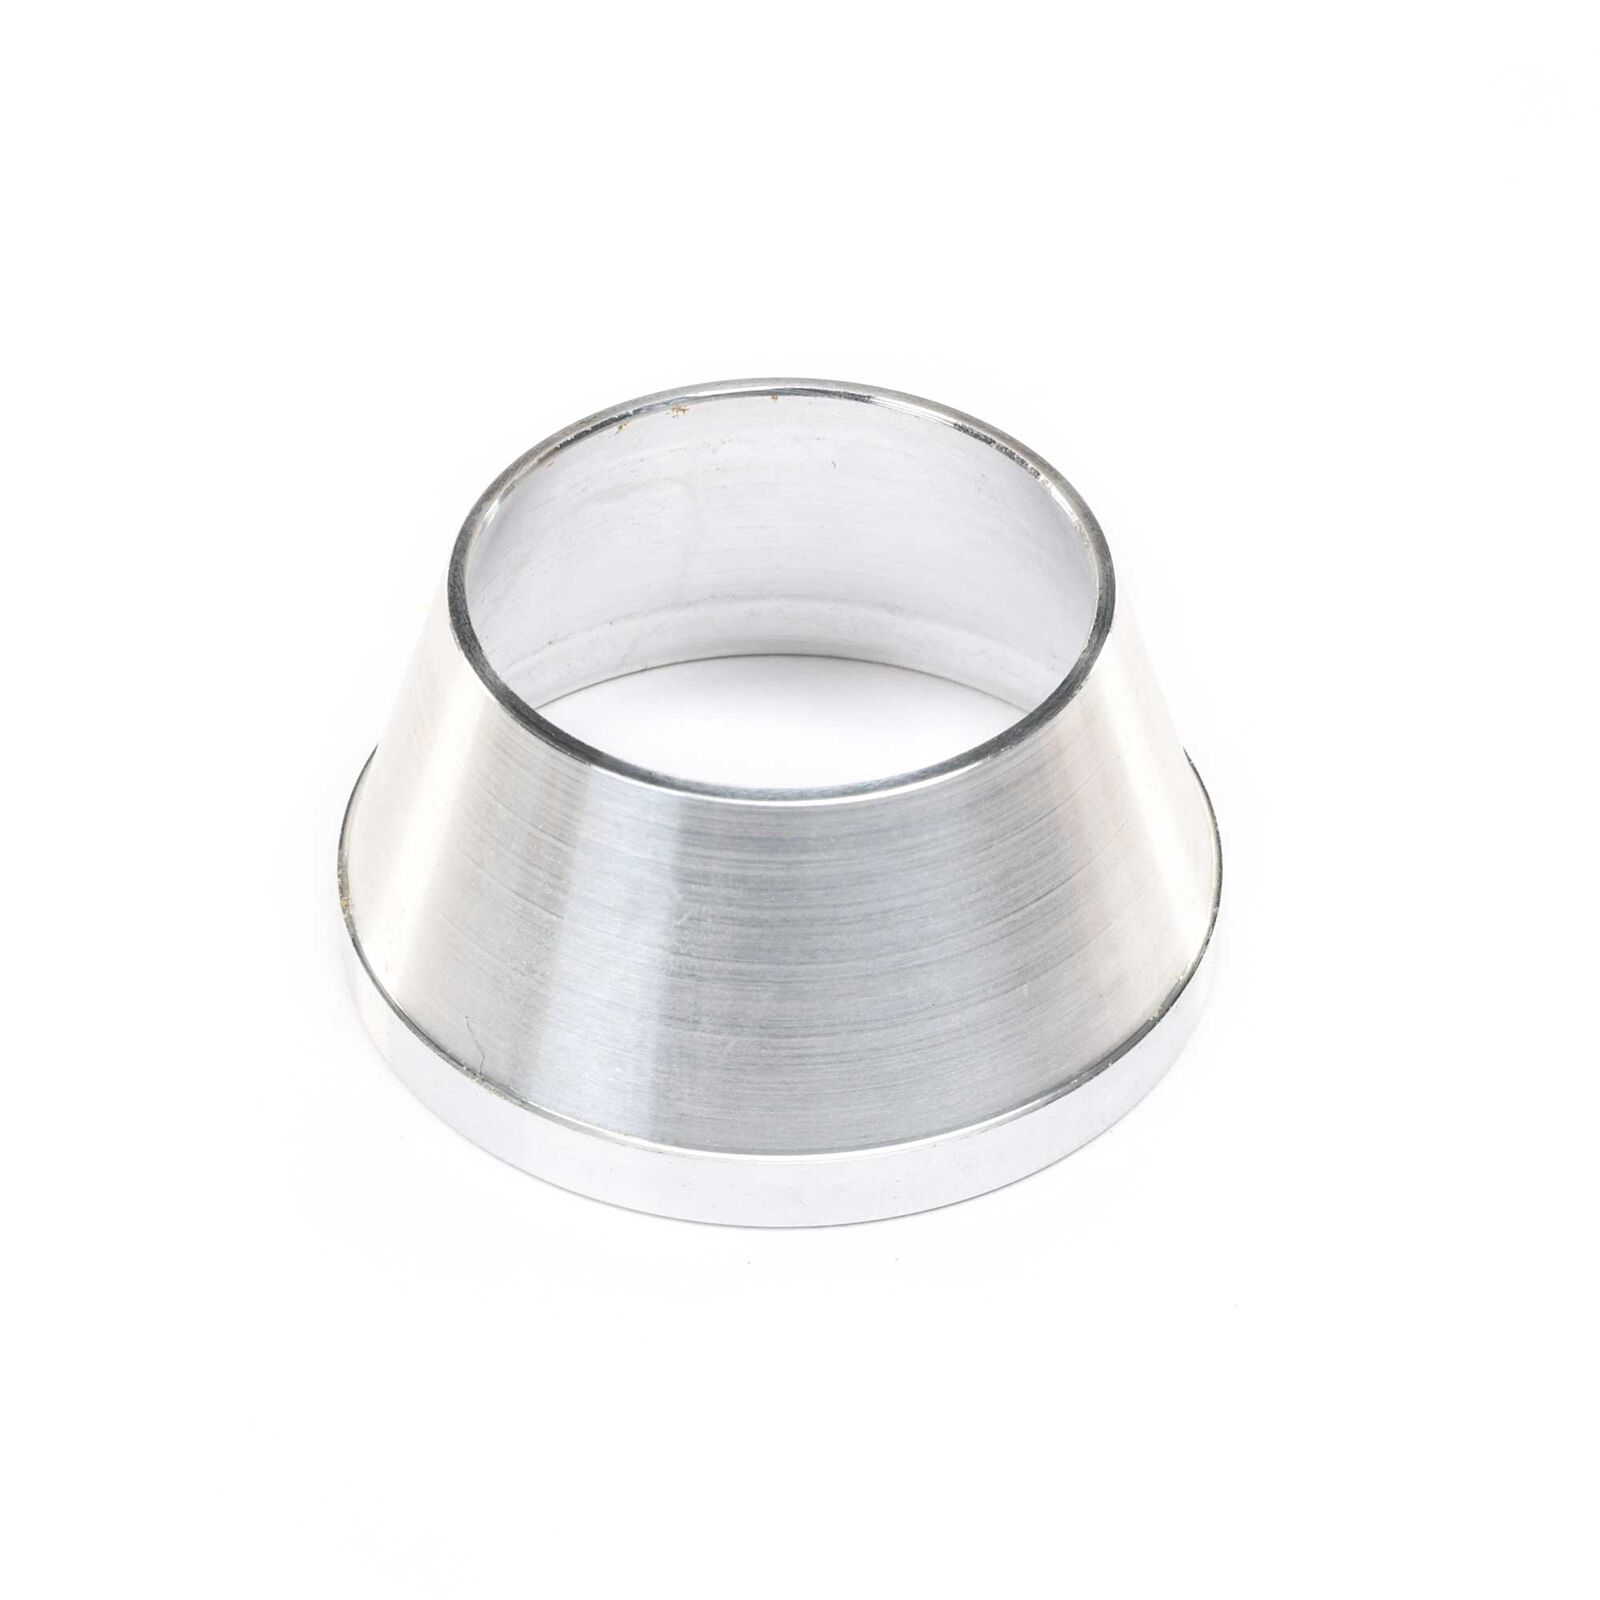 Aluminum Wear Ring: Jetstream